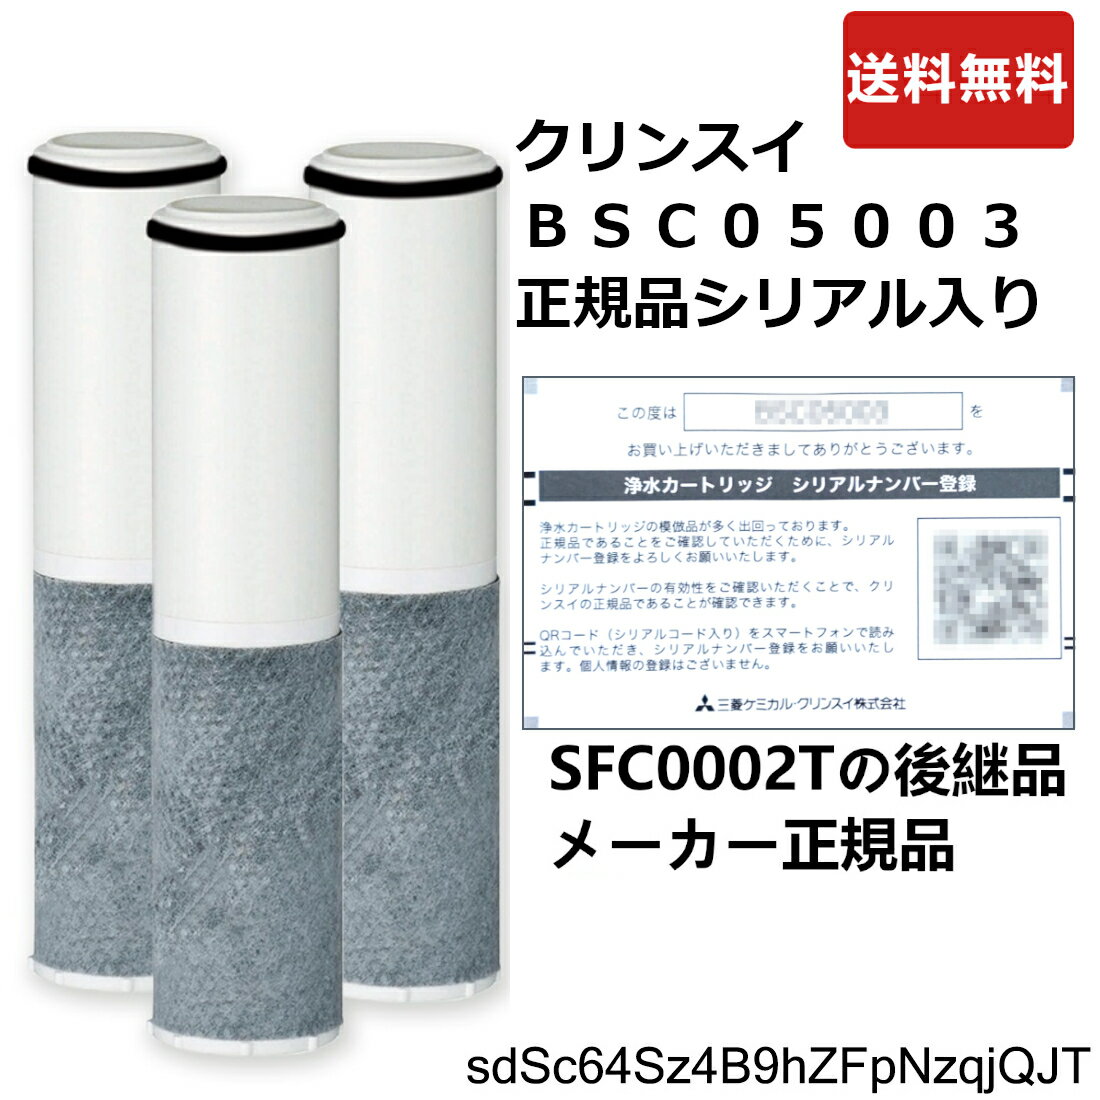 BSC05003：正規品確認シリアルカード